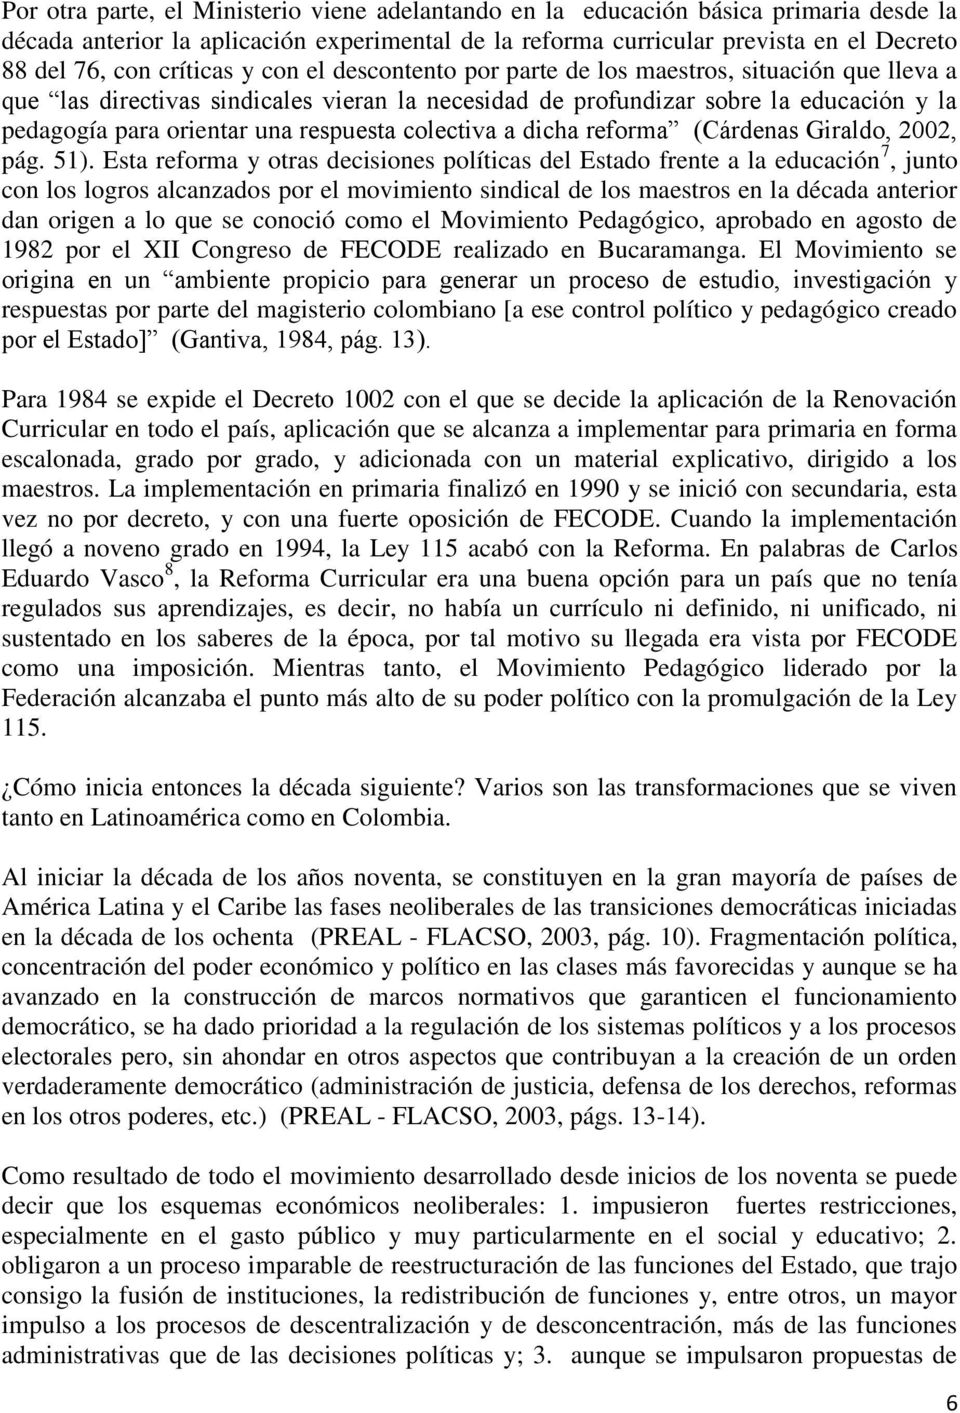 respuesta colectiva a dicha reforma (Cárdenas Giraldo, 2002, pág. 51).